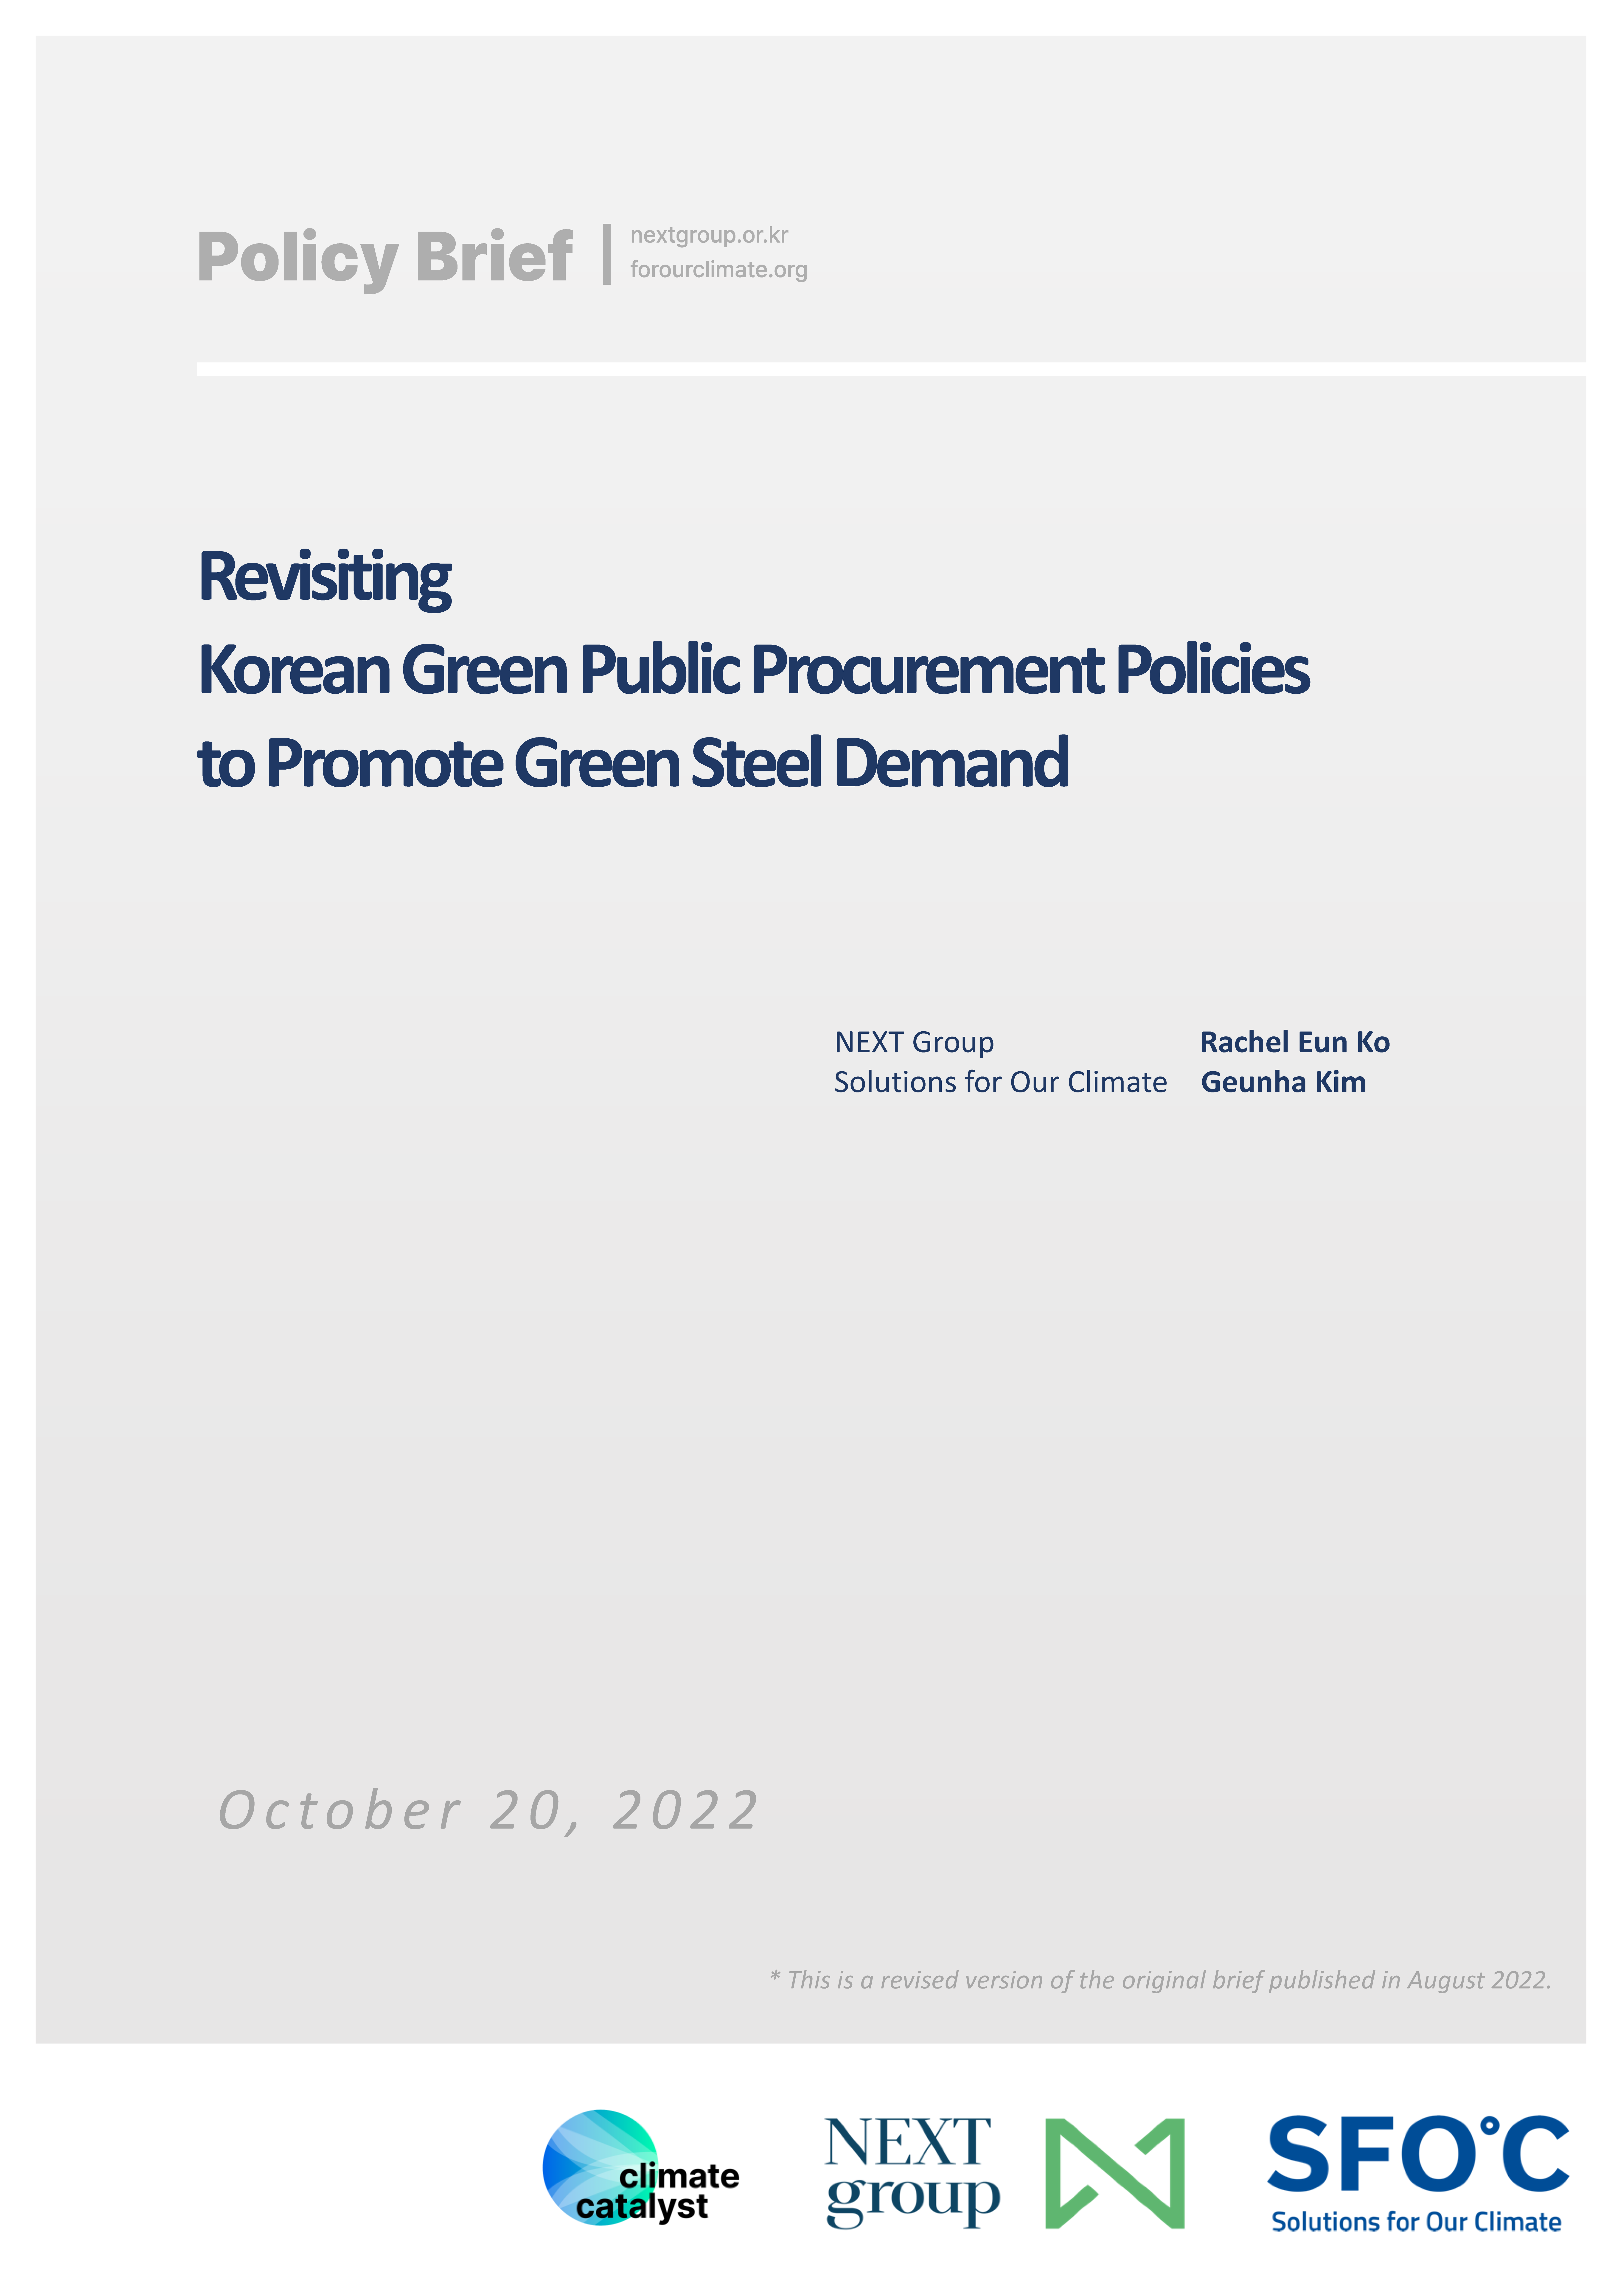 Revisiting Korean Green Public Procurement Policies to Promote Green Steel Demand